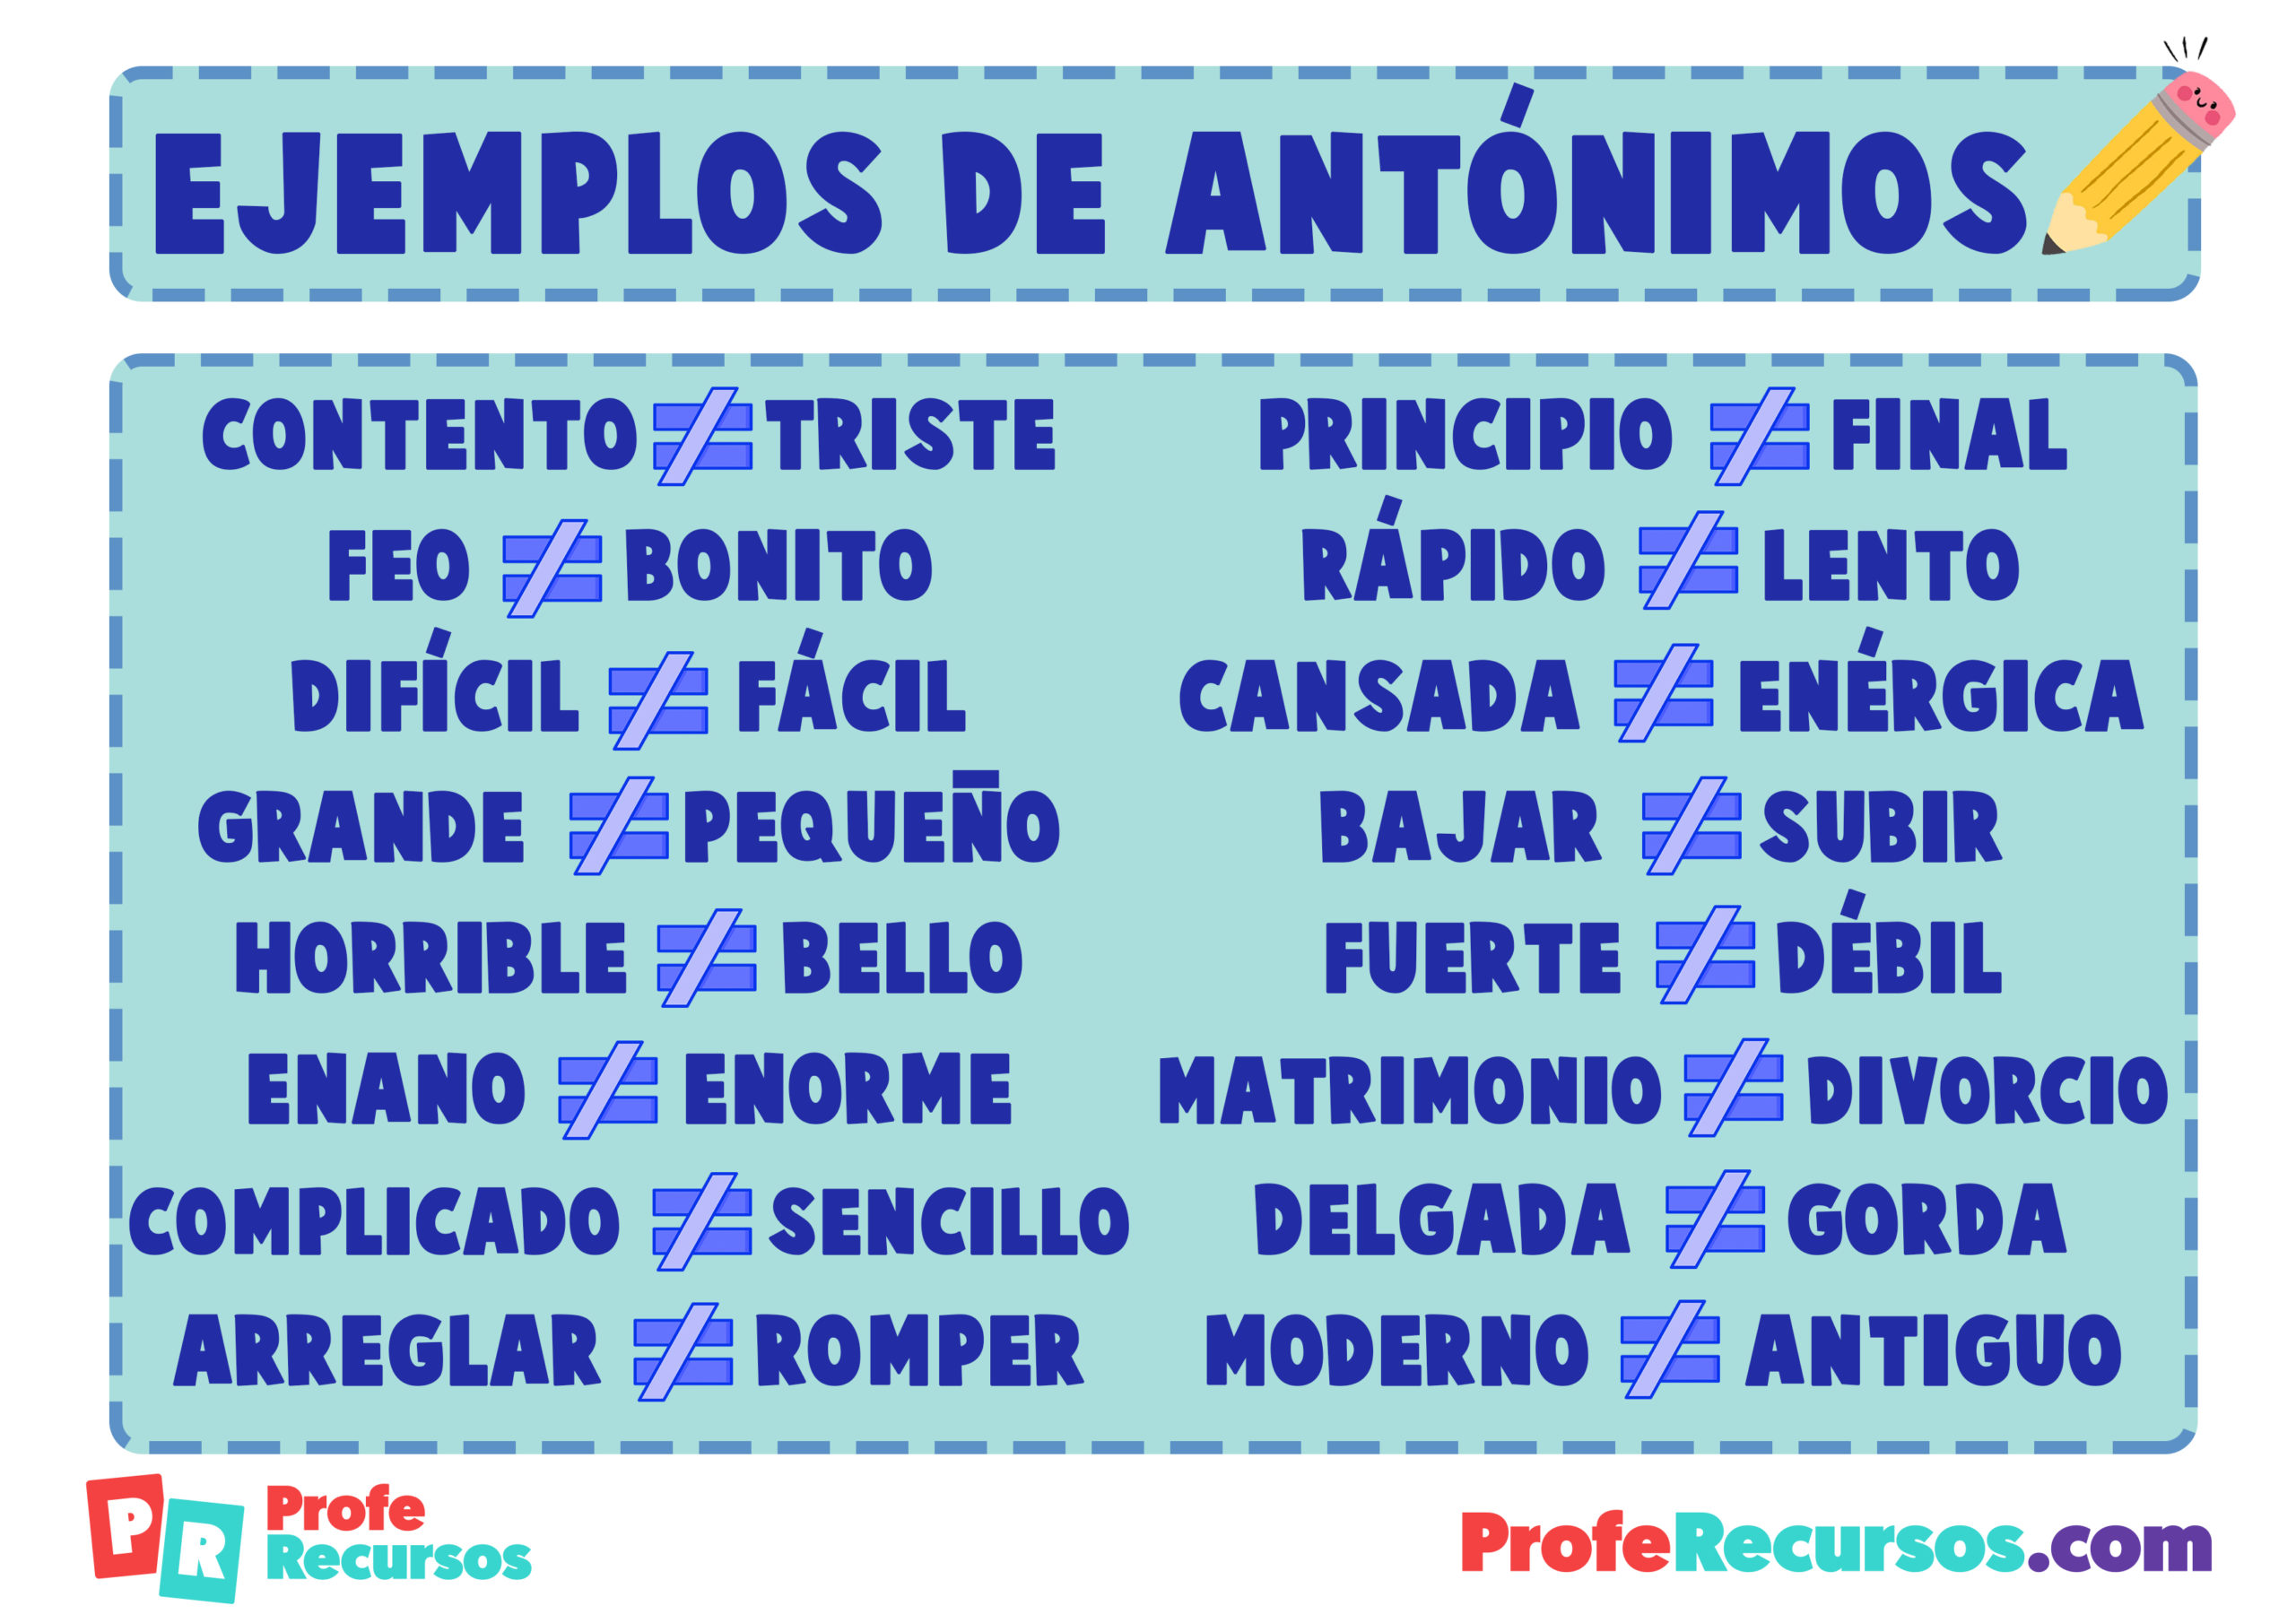 Antonimos2